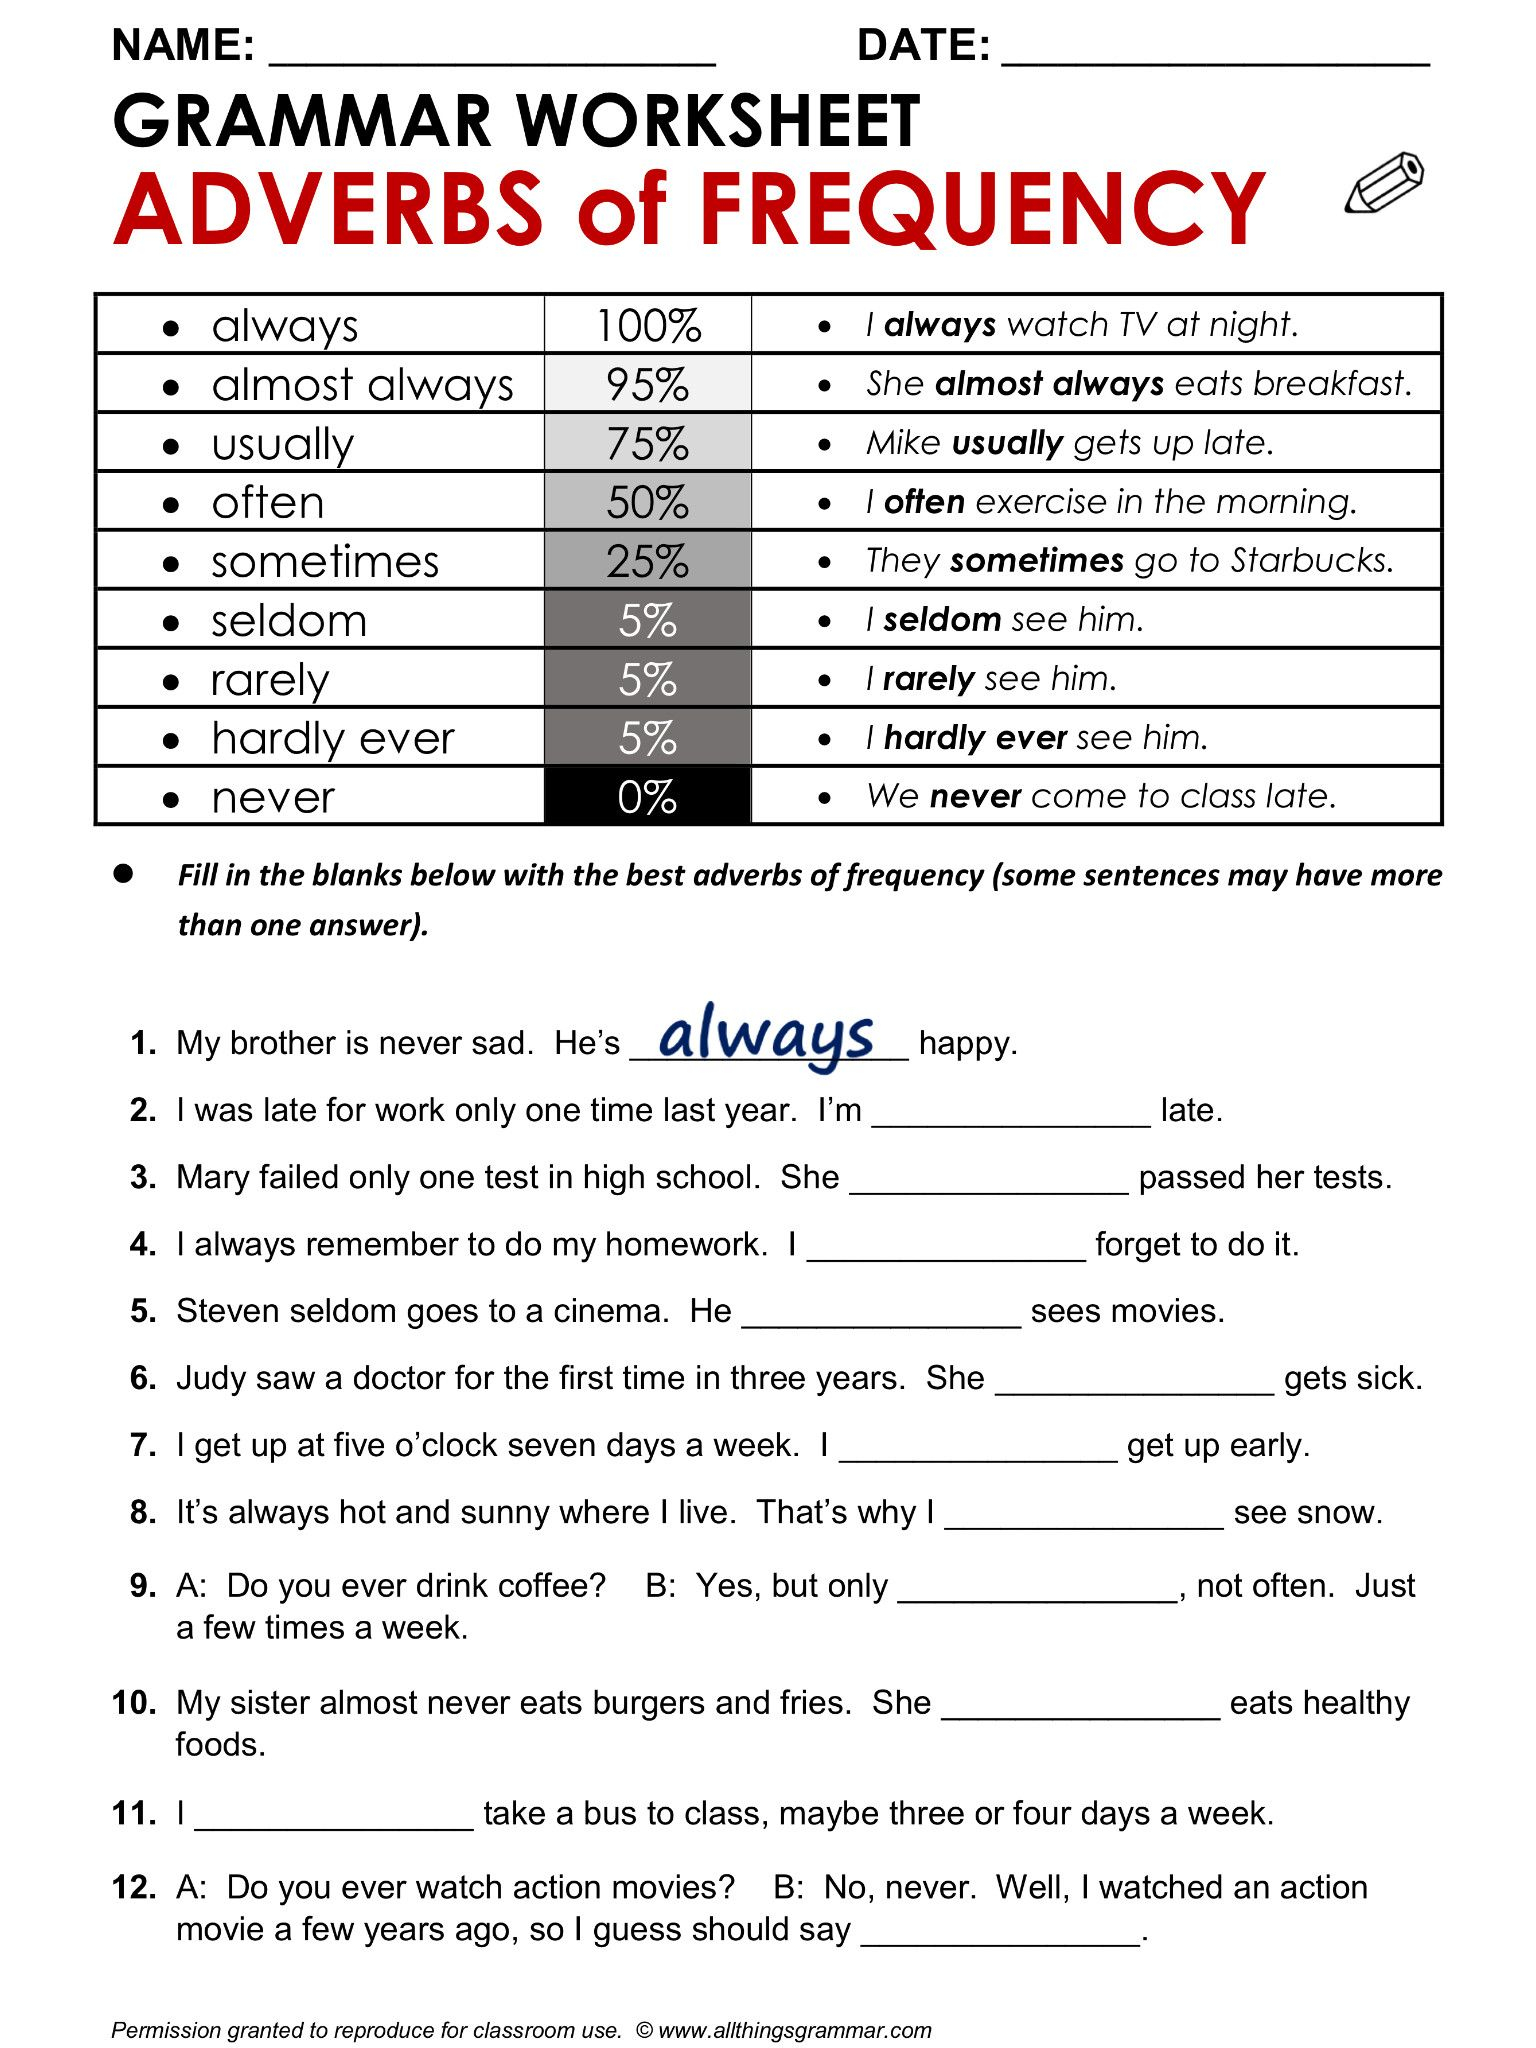 adjectives-adverbs-worksheet-pdf-adjectiveworksheets